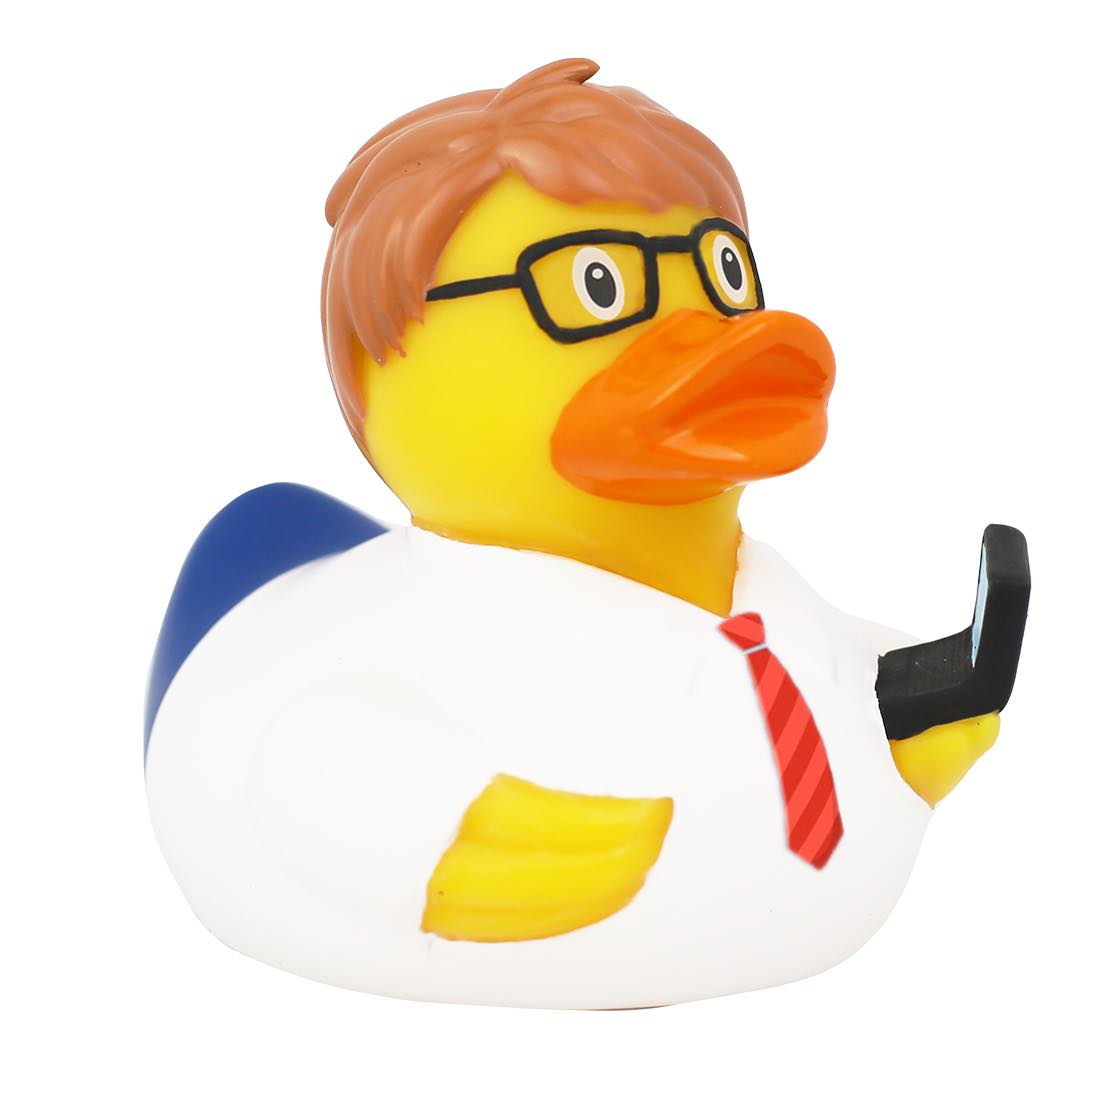 IT Developer Rubber Duck | Buy premium rubber ducks online - world wide ...